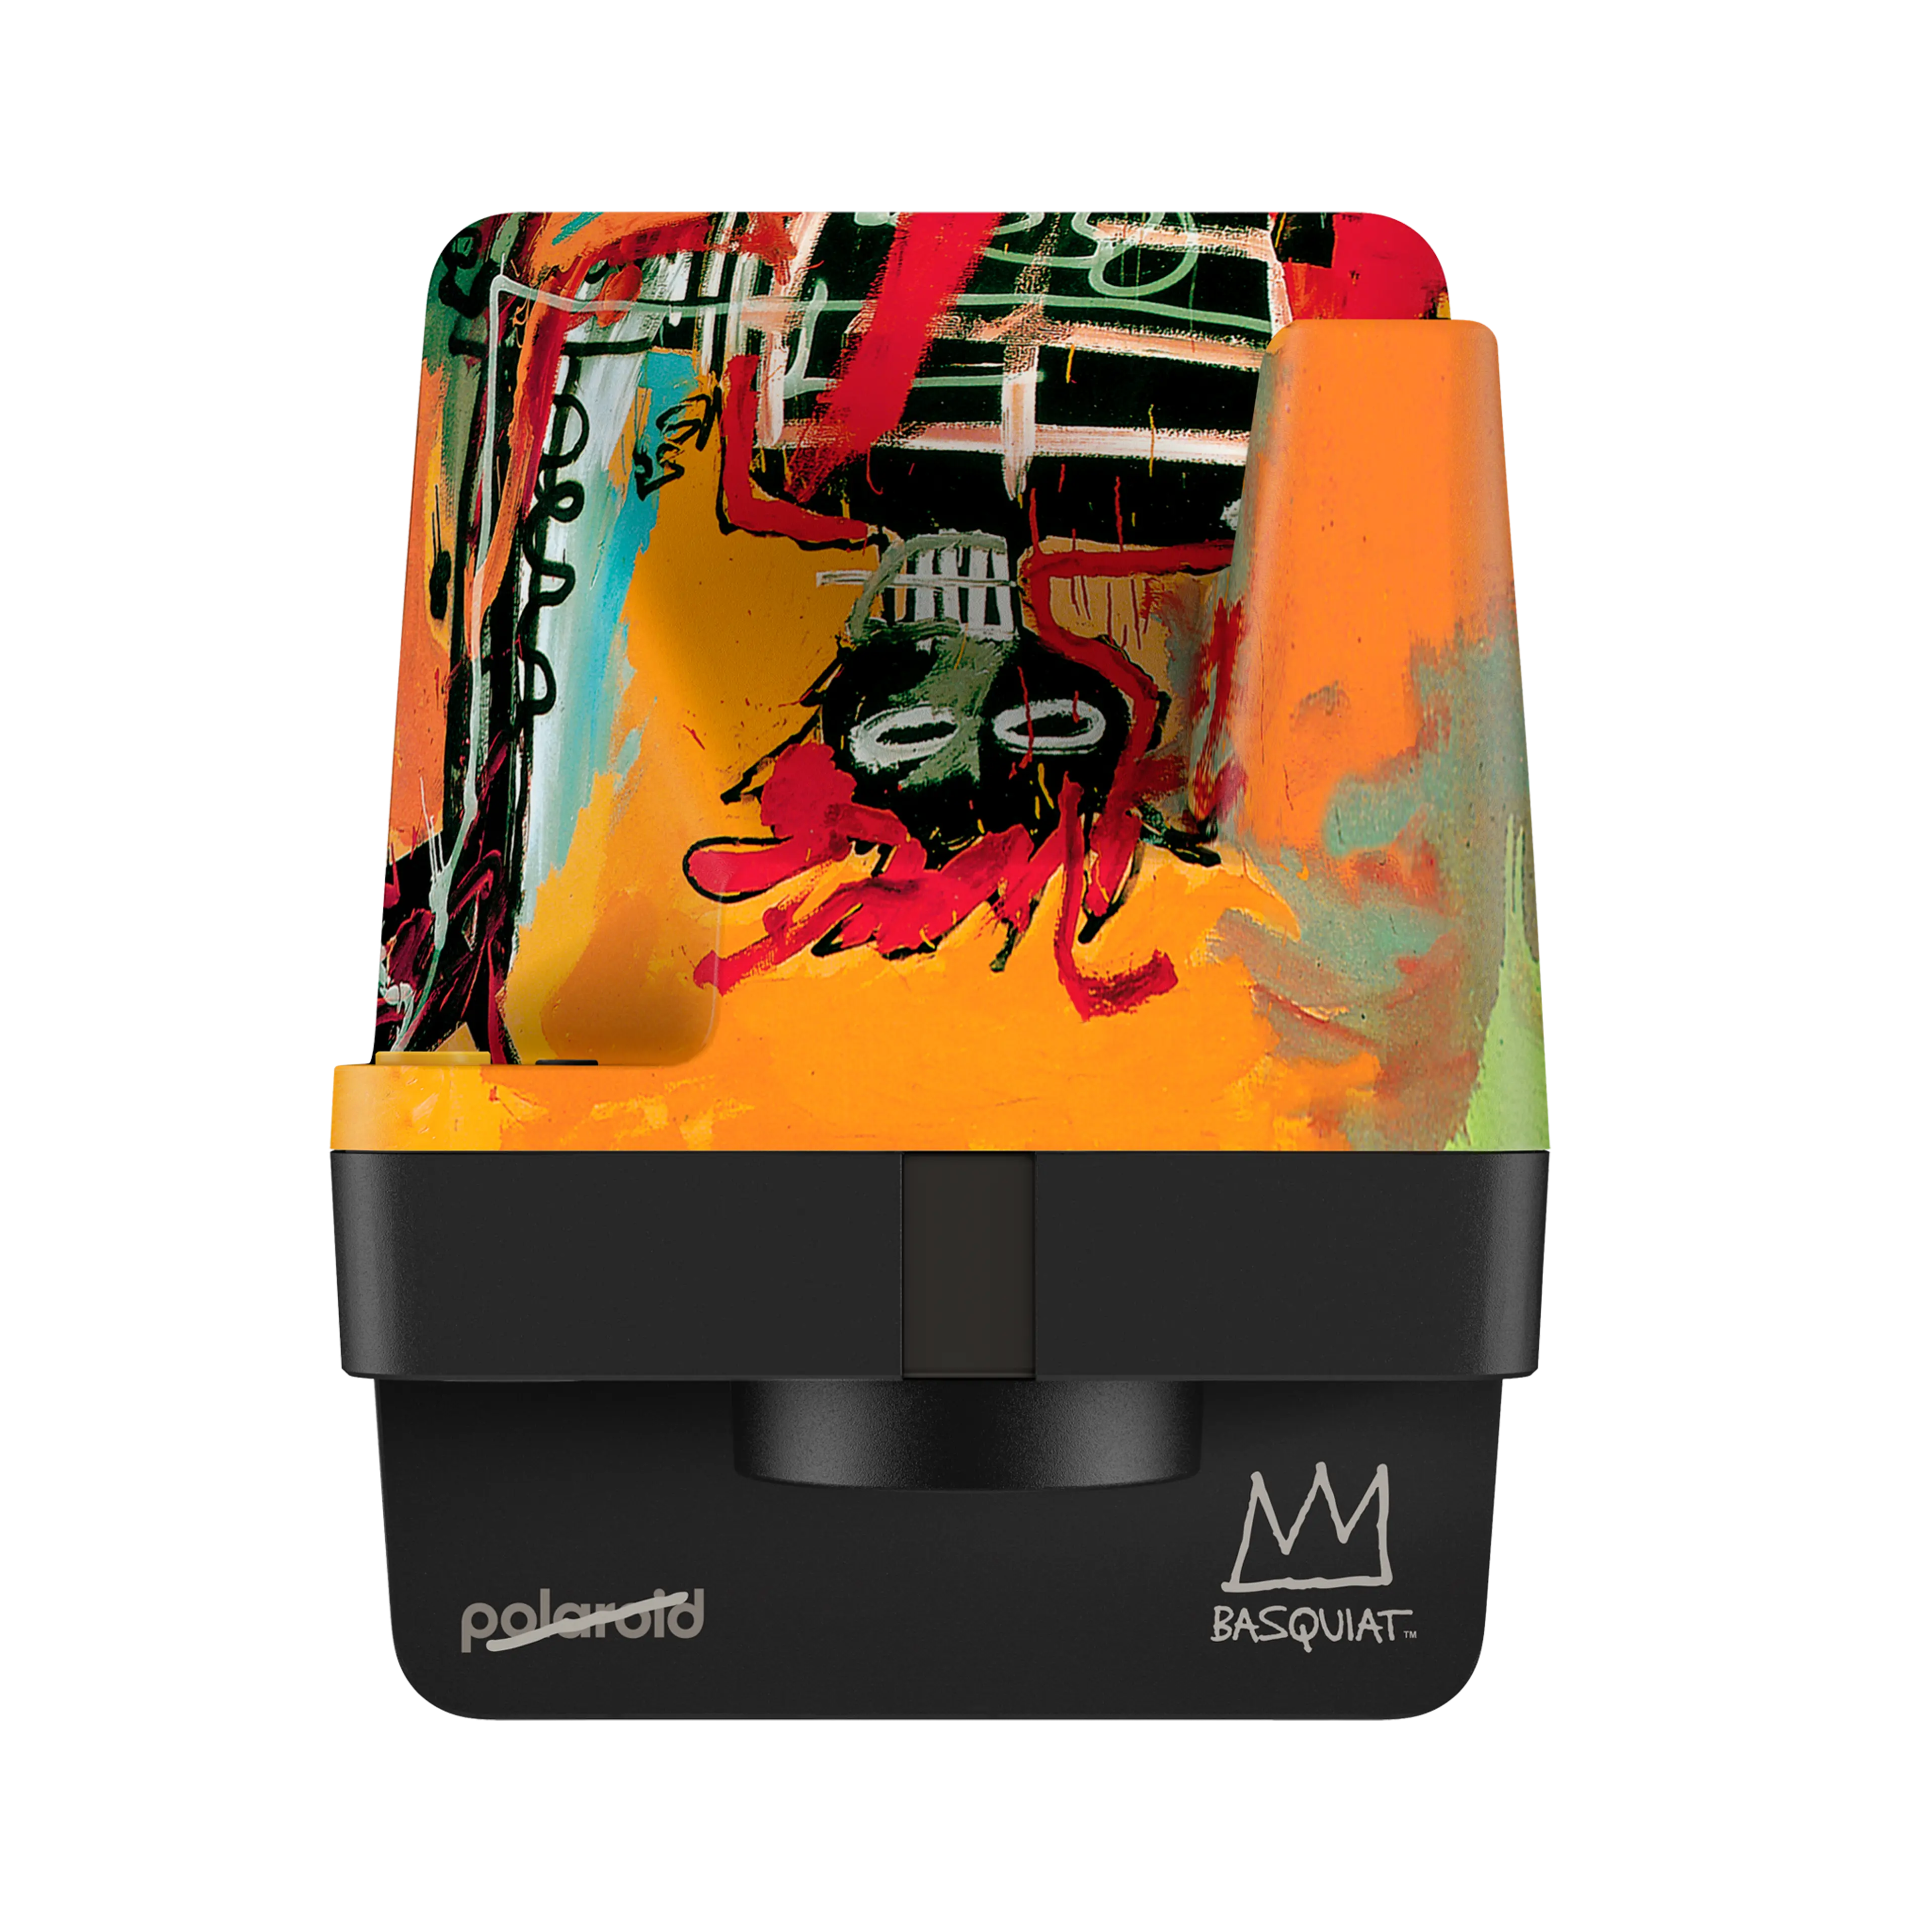 Polaroid Now Generation 2 - Basquiat Edition